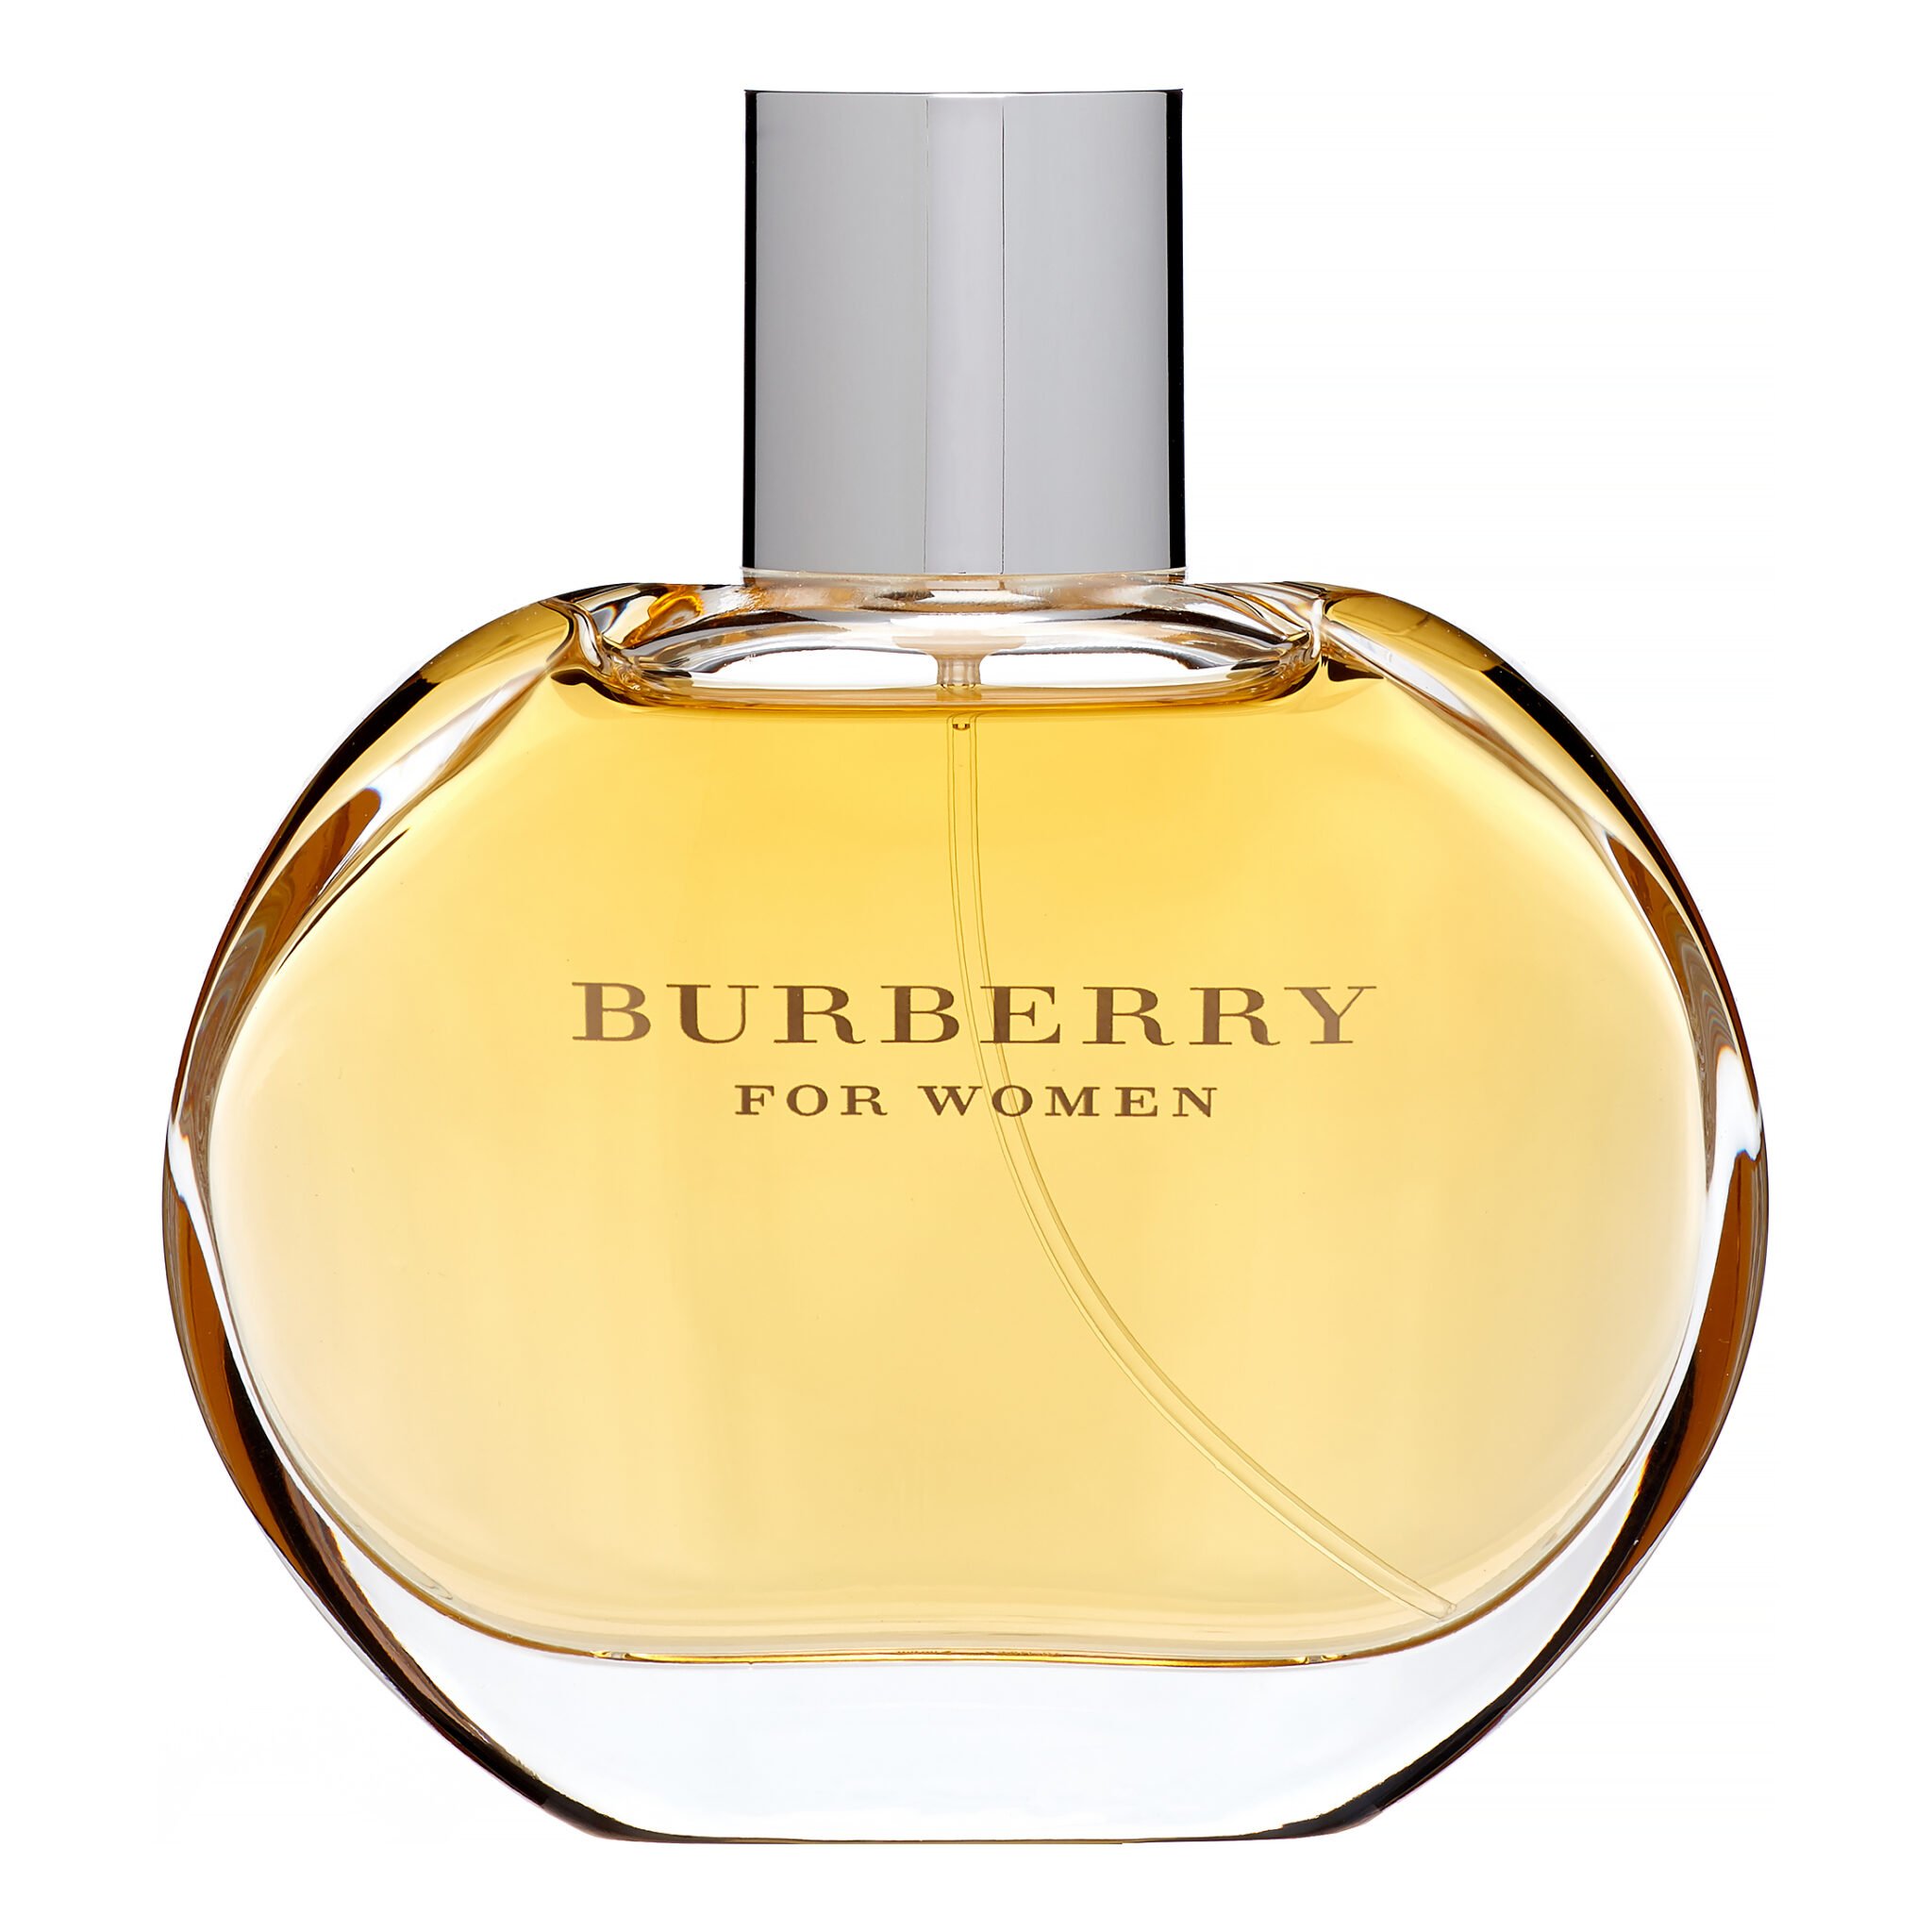 Burberry Perfume for Women ONLY $34.99 (Reg $98)